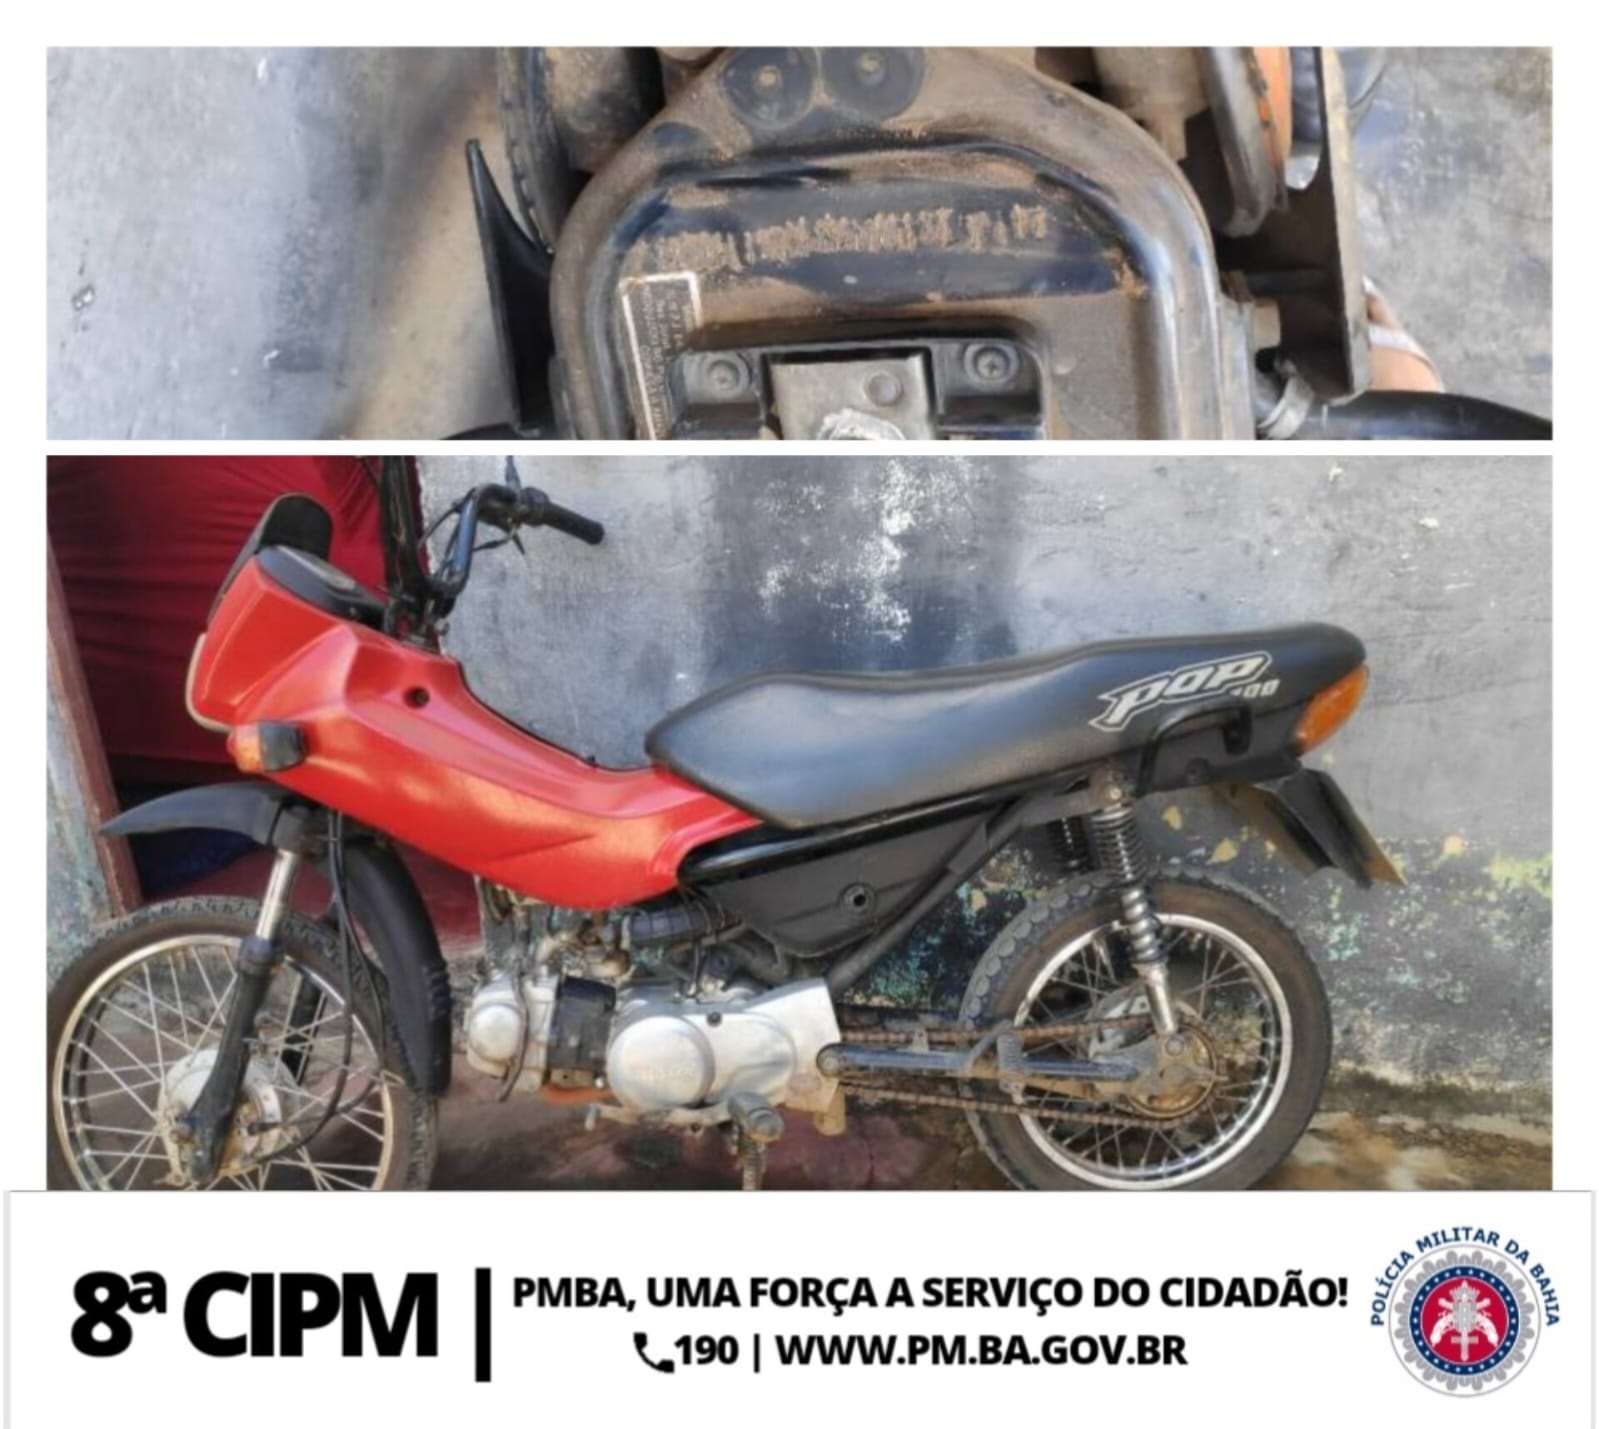 8ª CIPM: Poliícia Militar Apreende Moto Adulterada em Caatiba